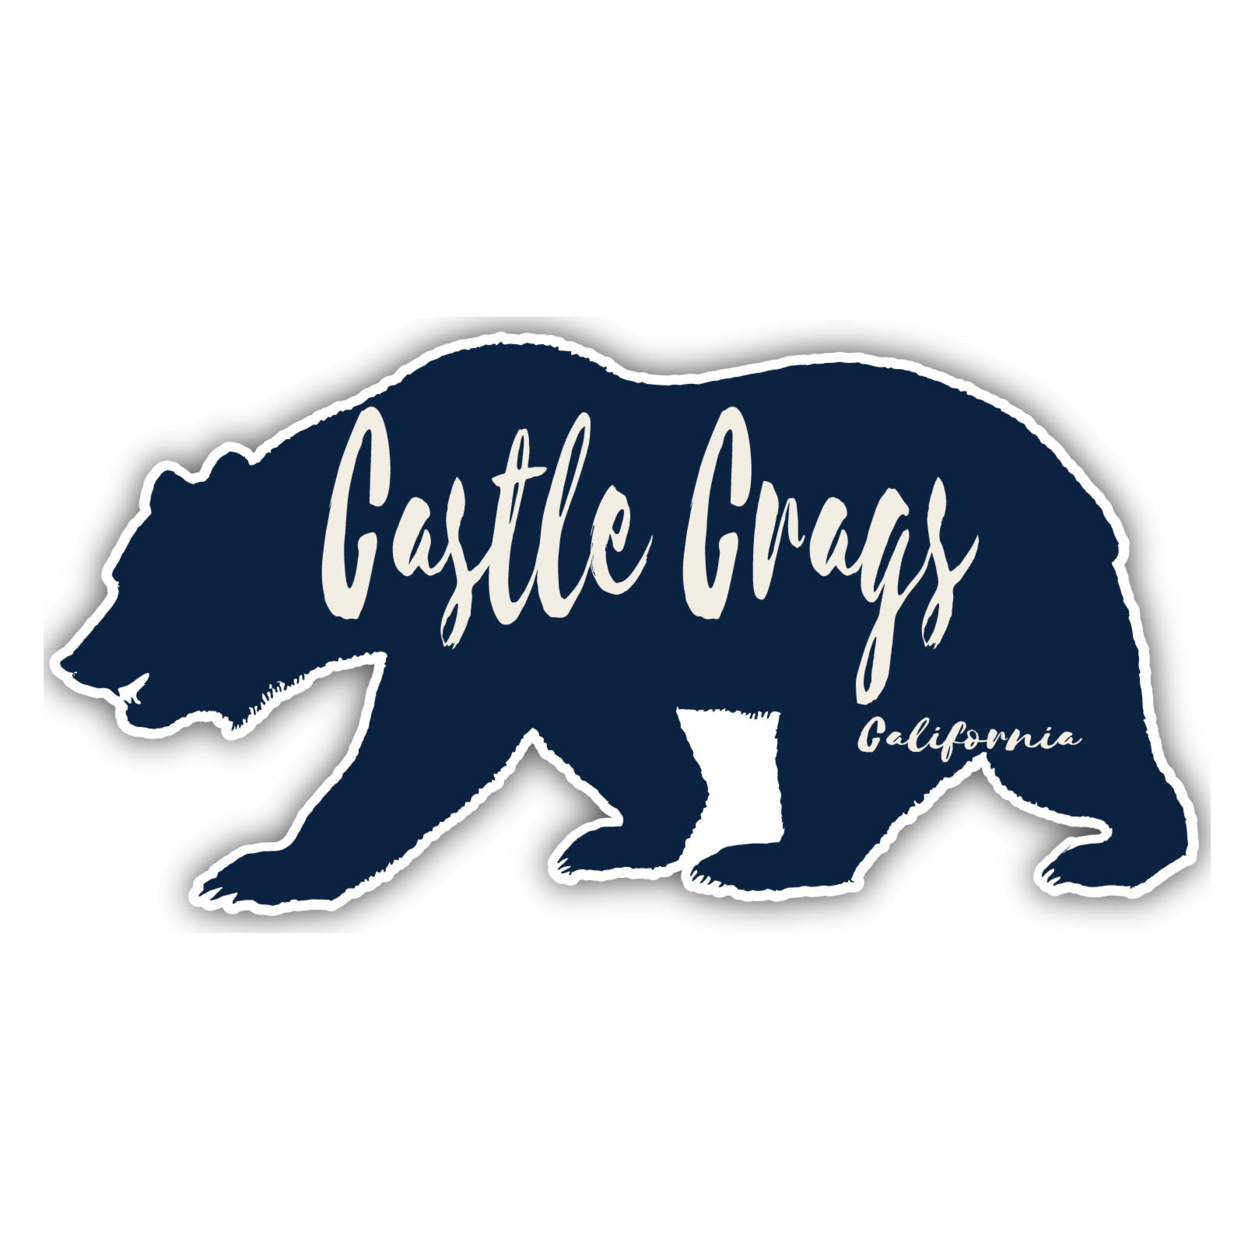 Castle Crags California Souvenir Decorative Stickers (Choose Theme And Size) - Single Unit, 8-Inch, Bear